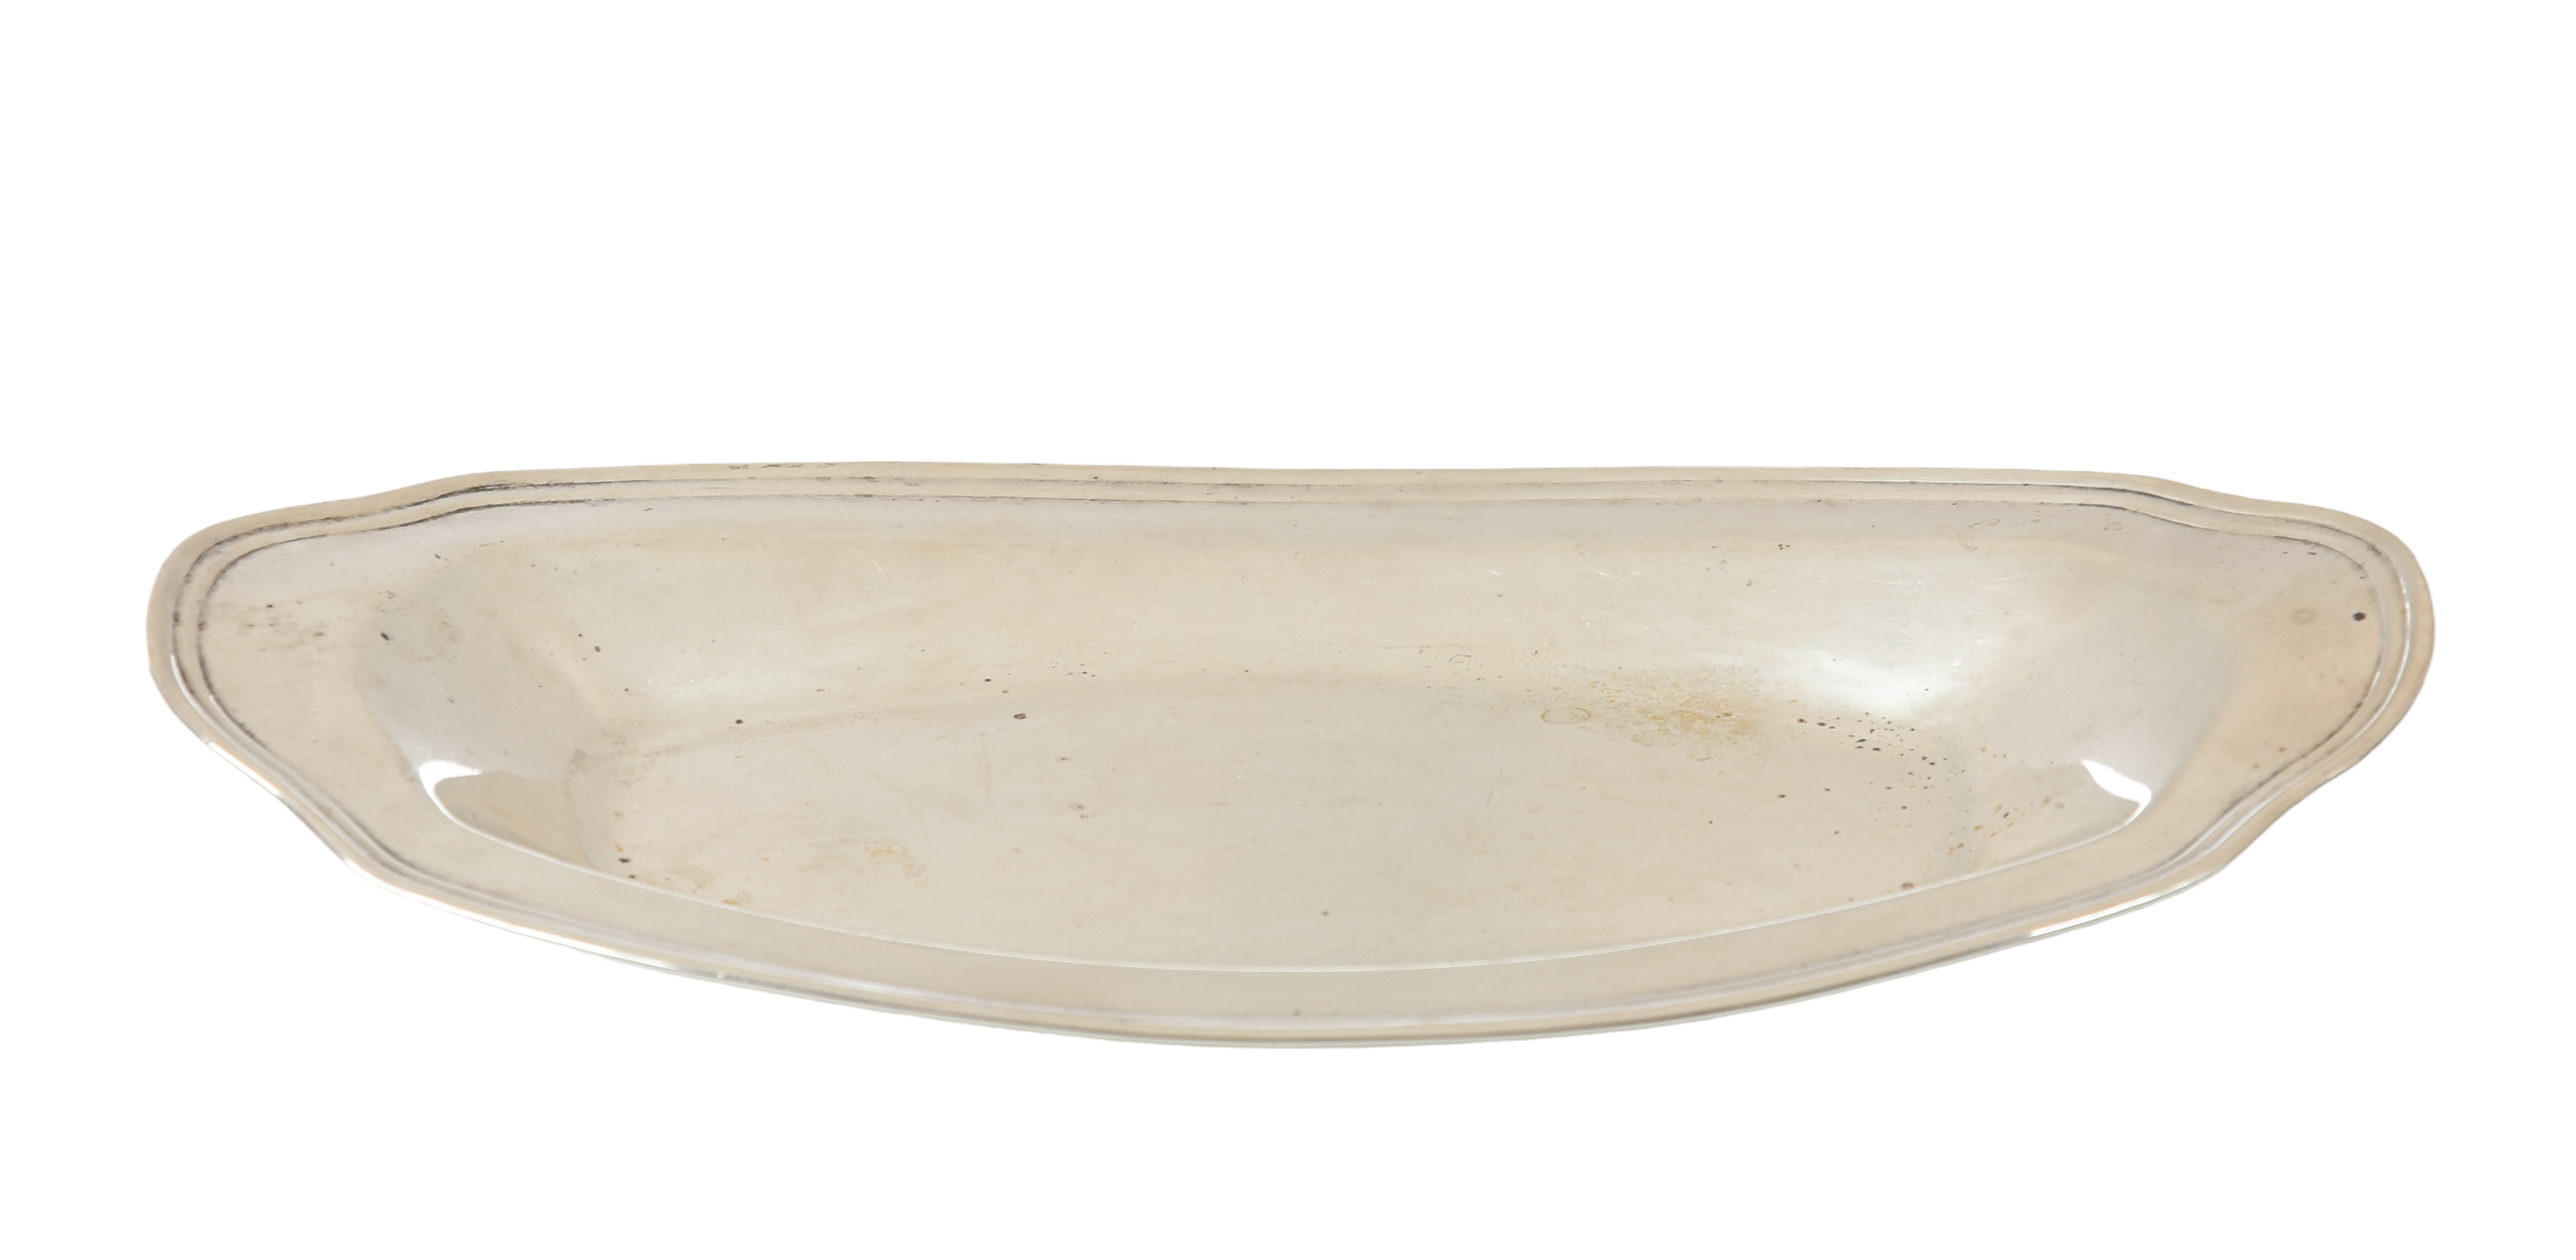 Sterling silver bread tray, 13 x 6-1/2,